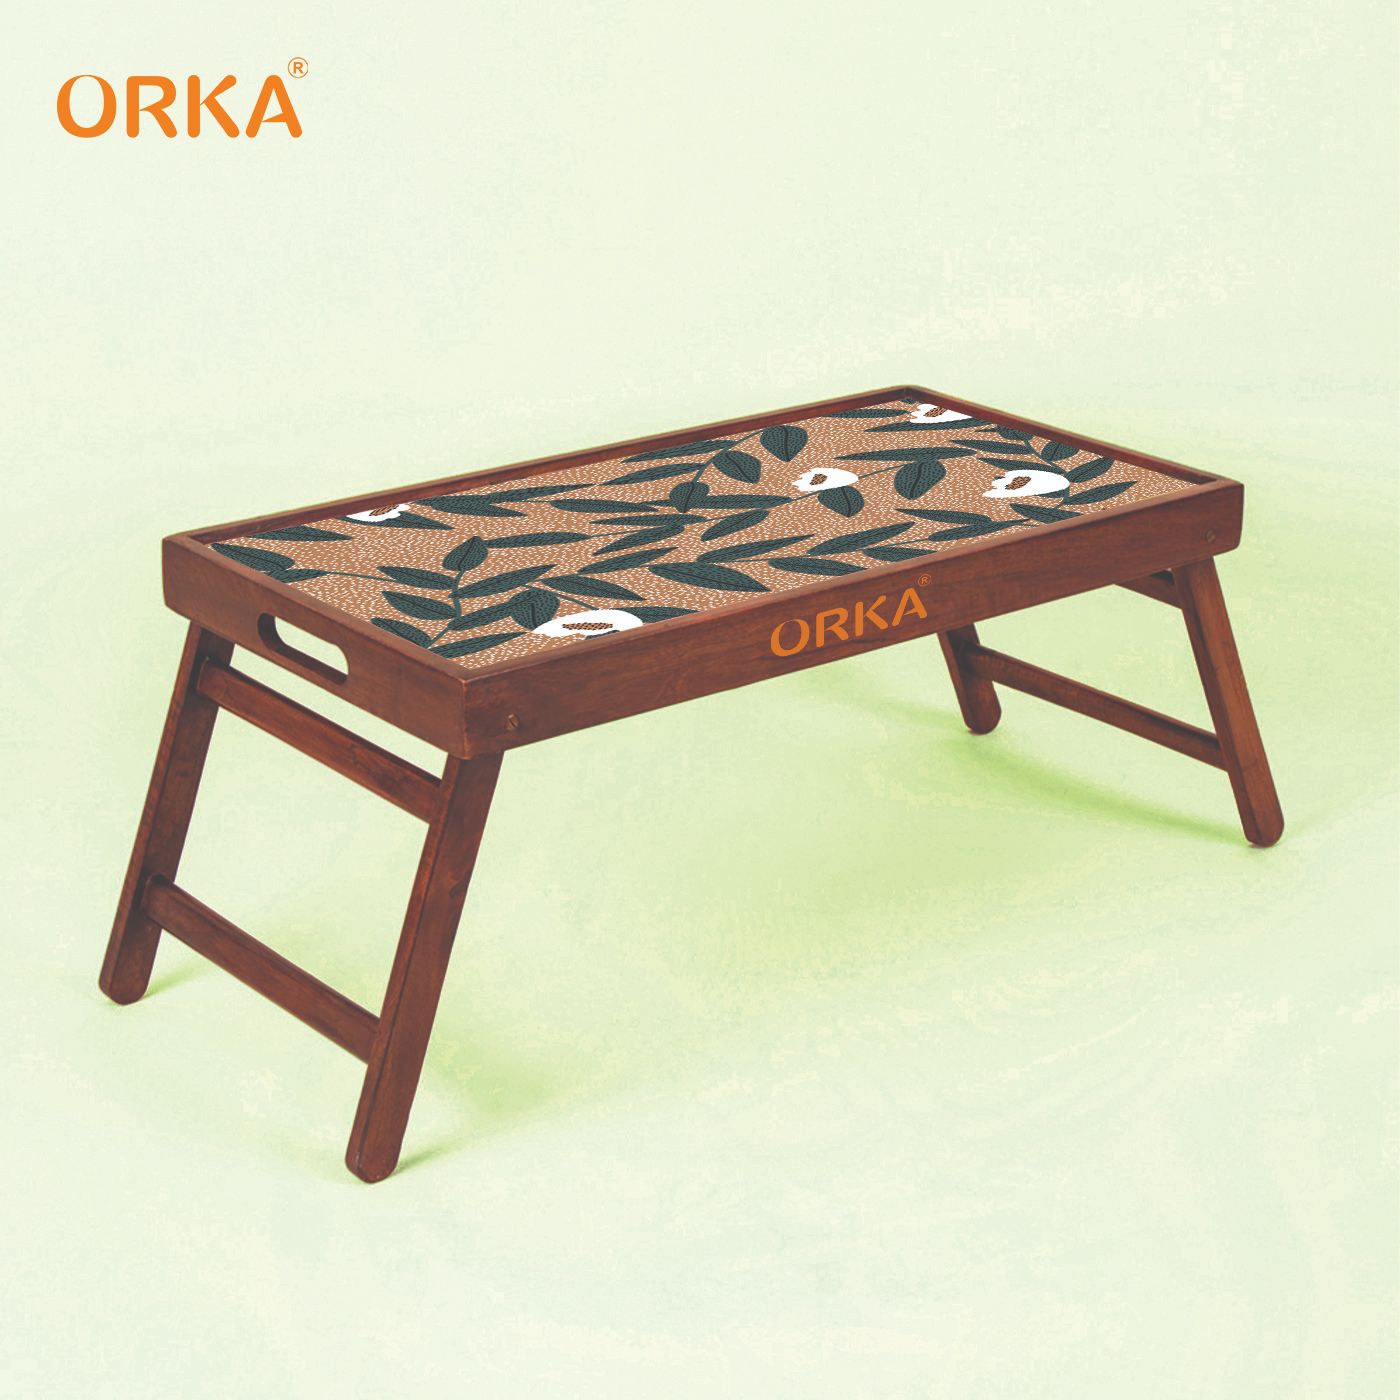 ORKA Buttercup Foldable Pine Wood Breakfast Table (Multicolor)  